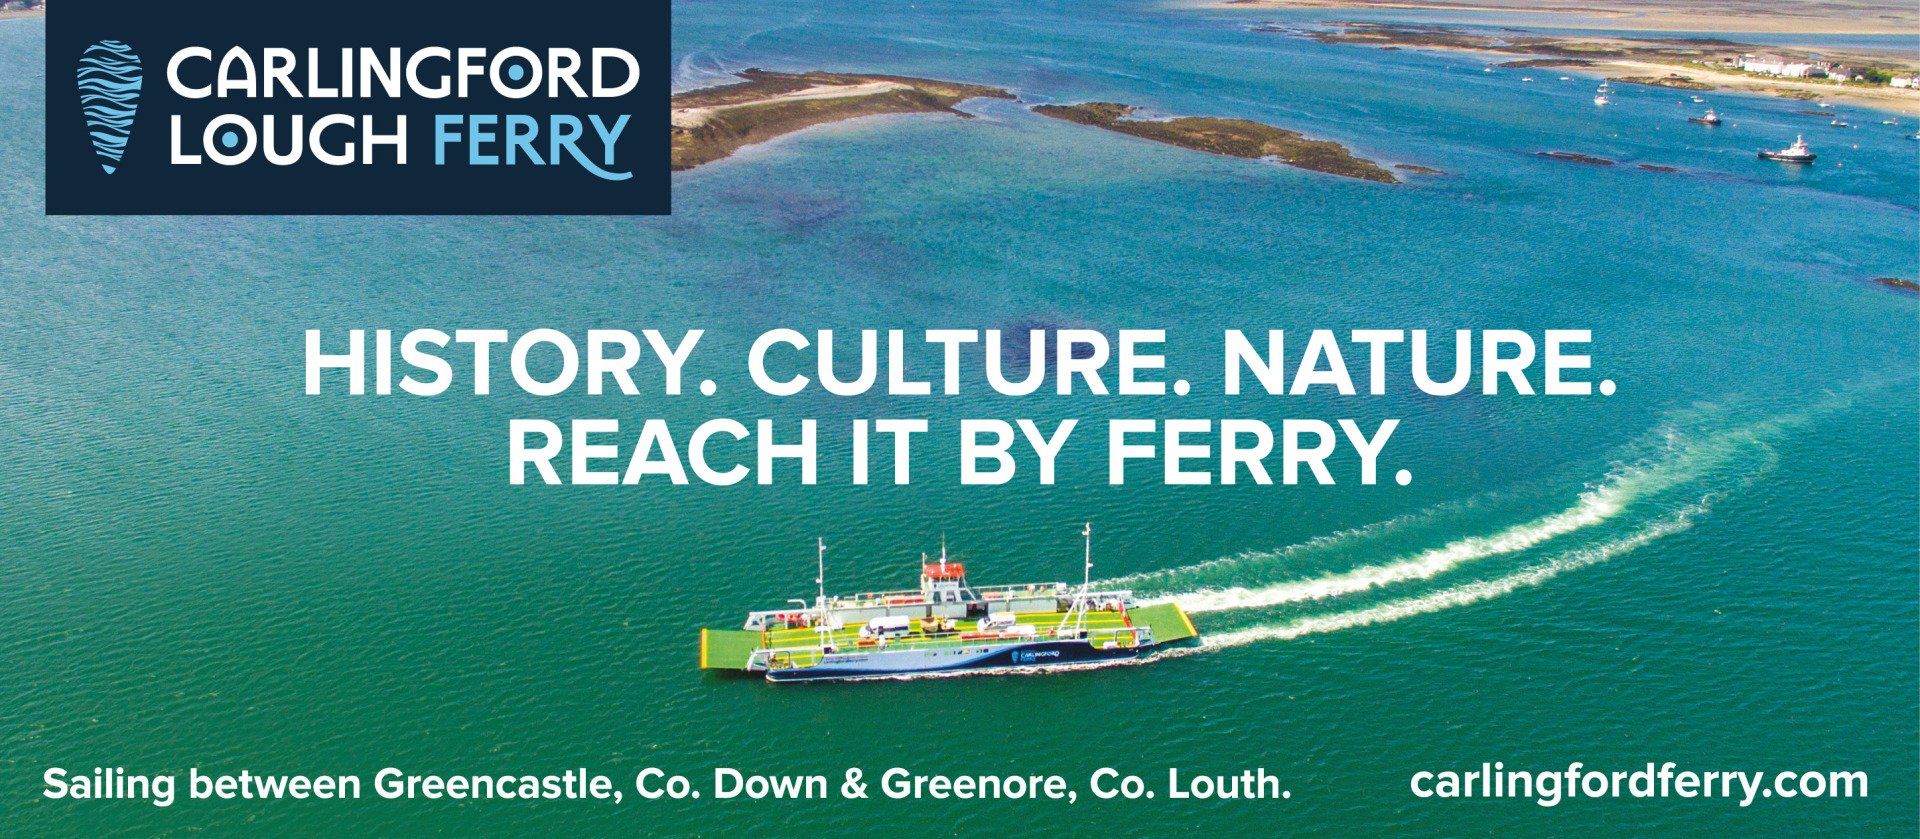 Carlingford Lough Ferry